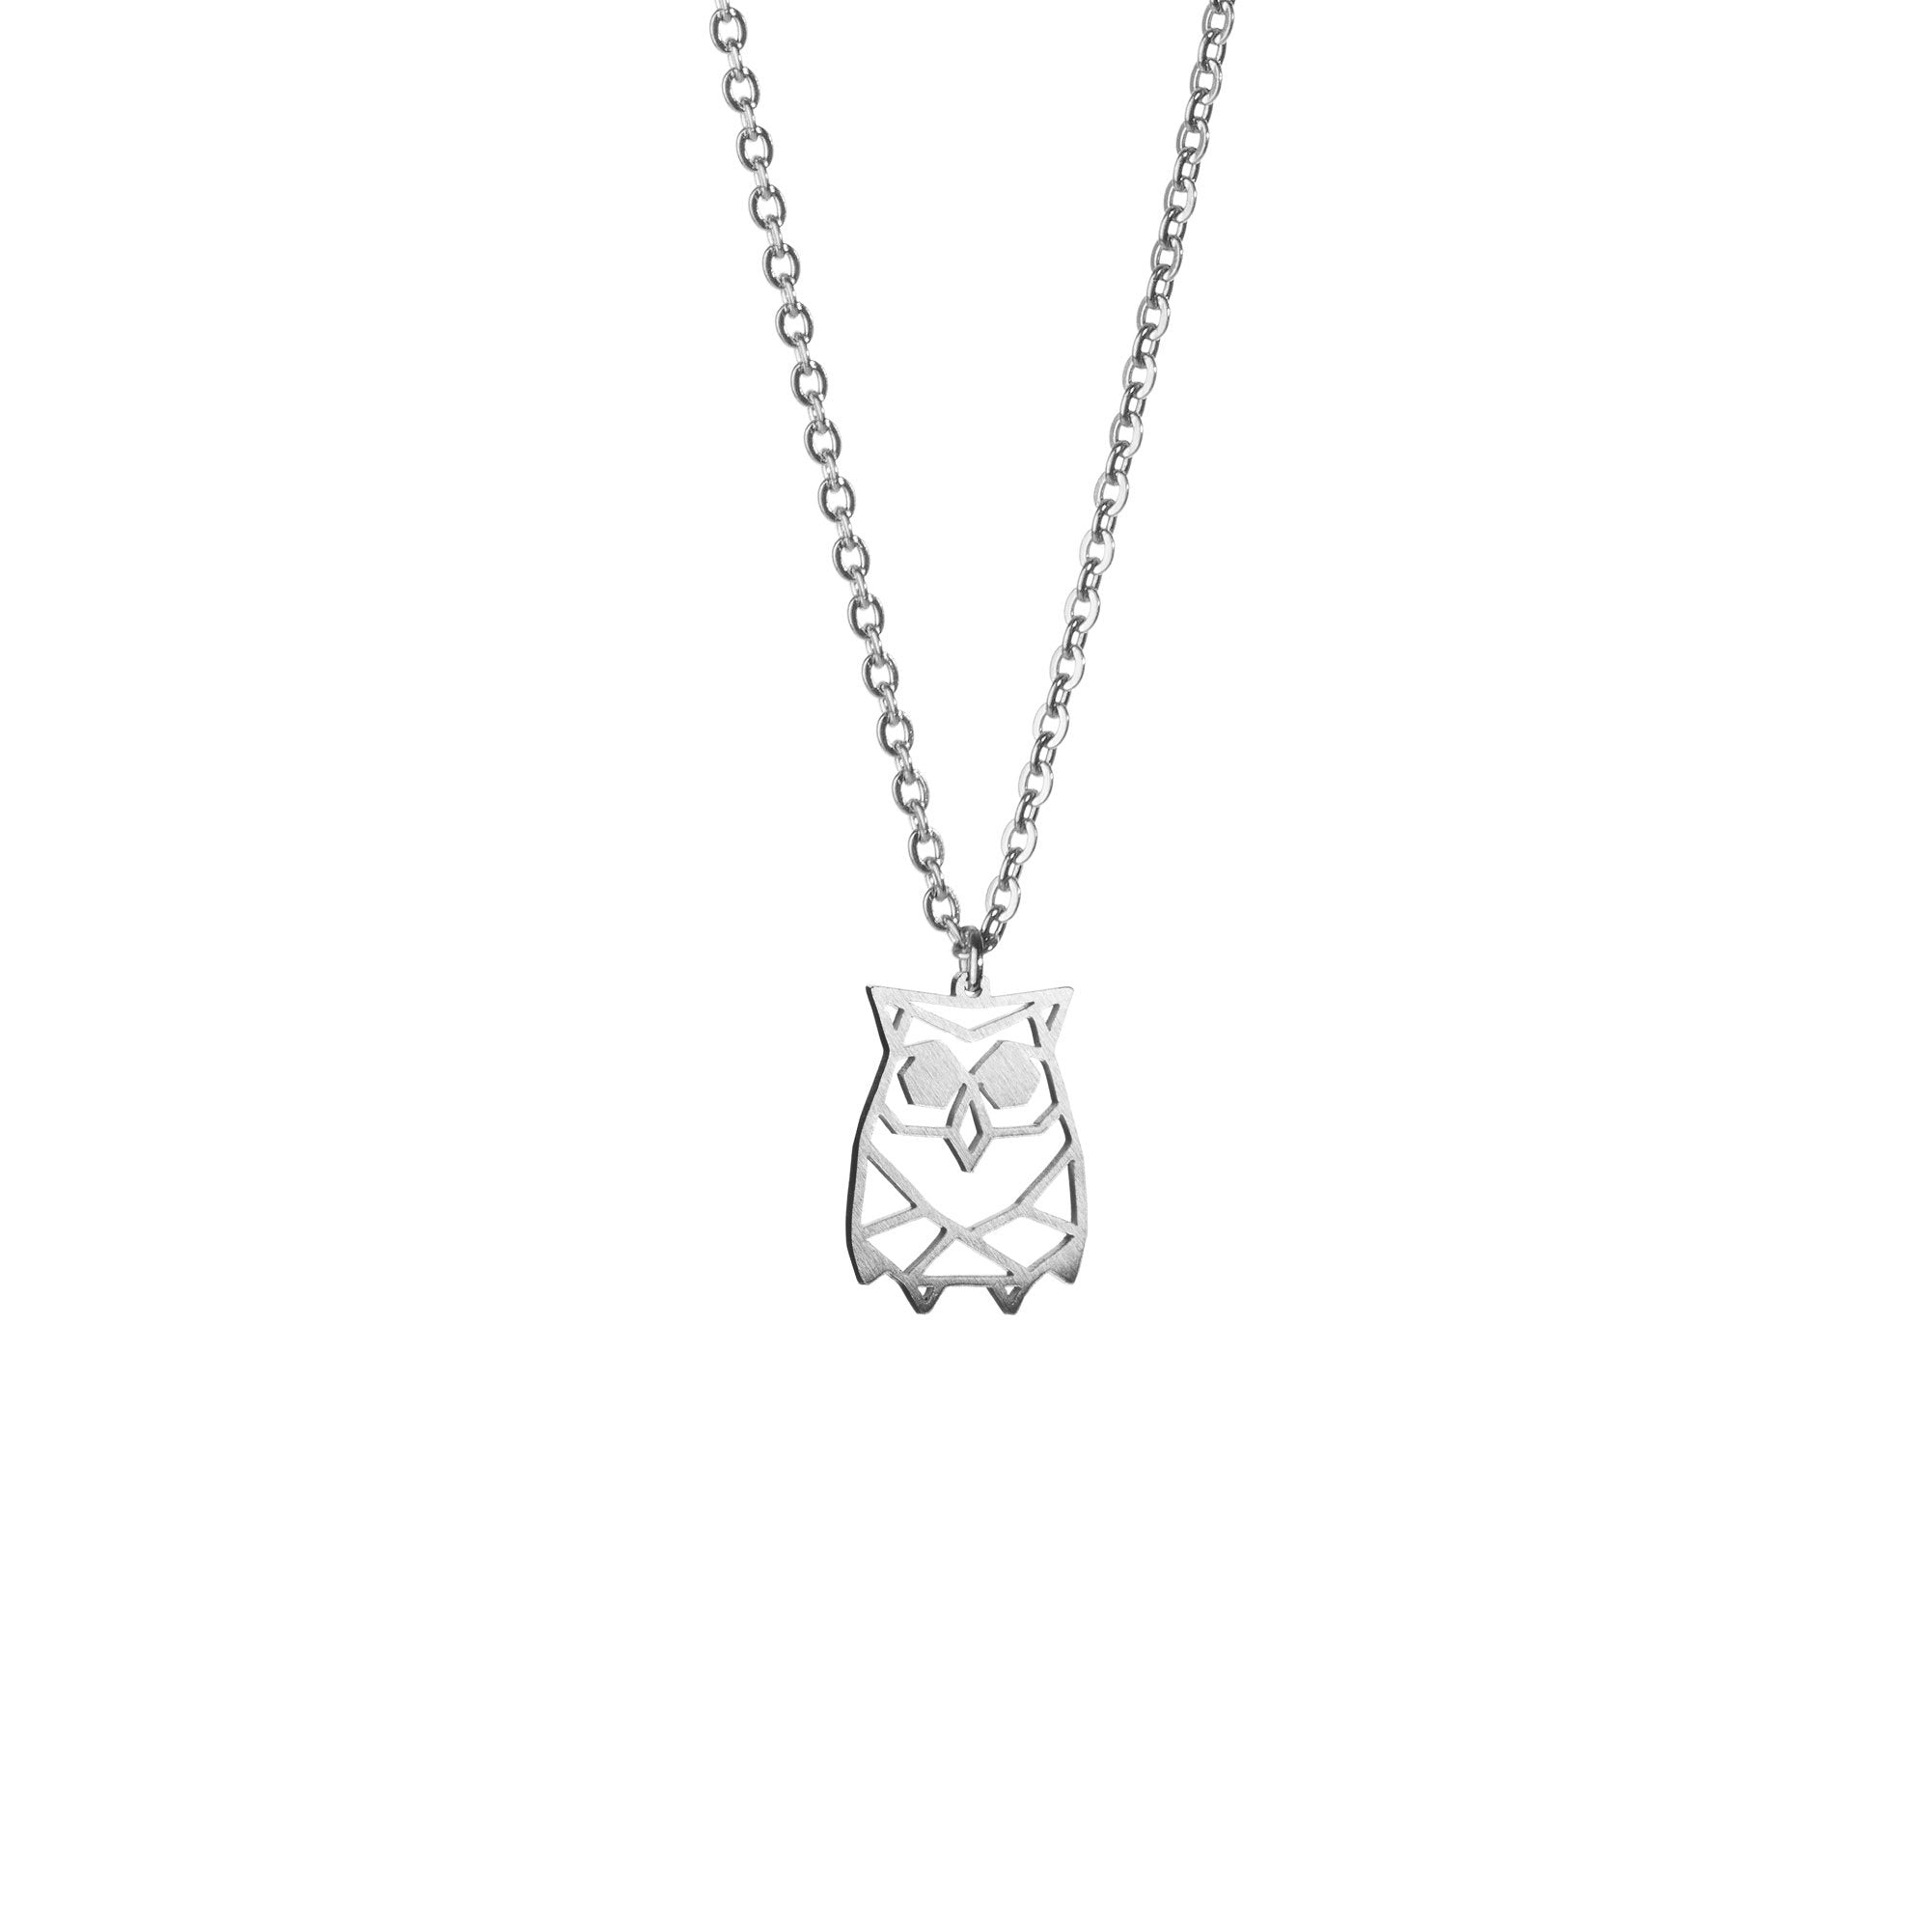 Owl Silver Origami Geometric Necklace